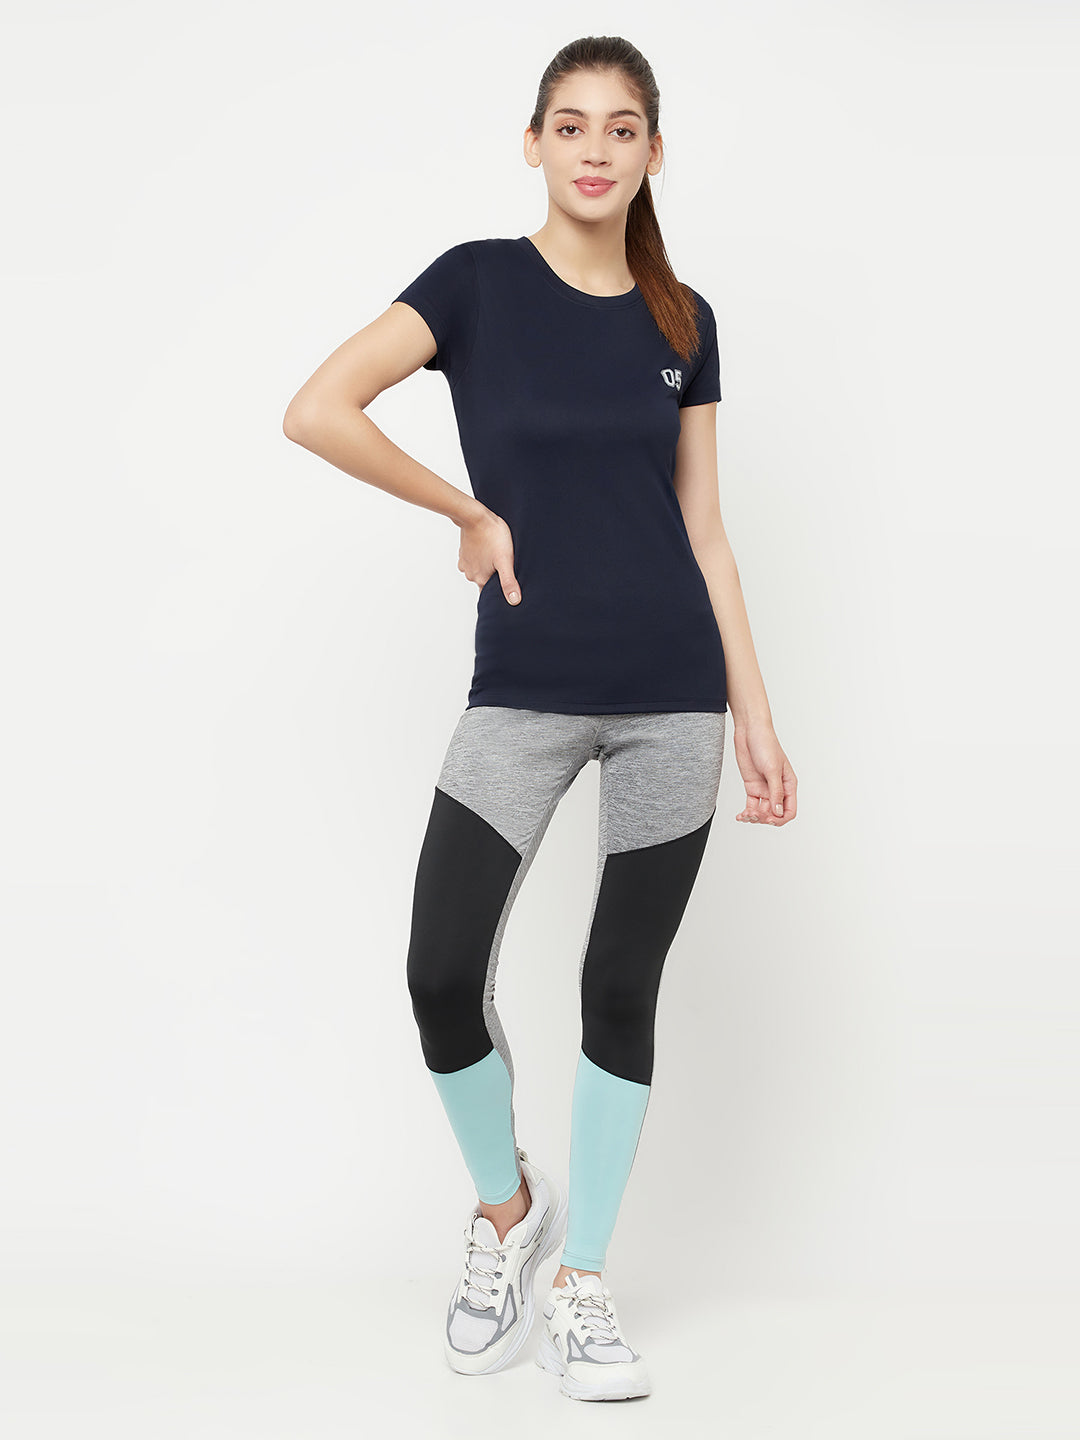 Navy Blue Round Neck Sports T-Shirt - Women T-Shirts